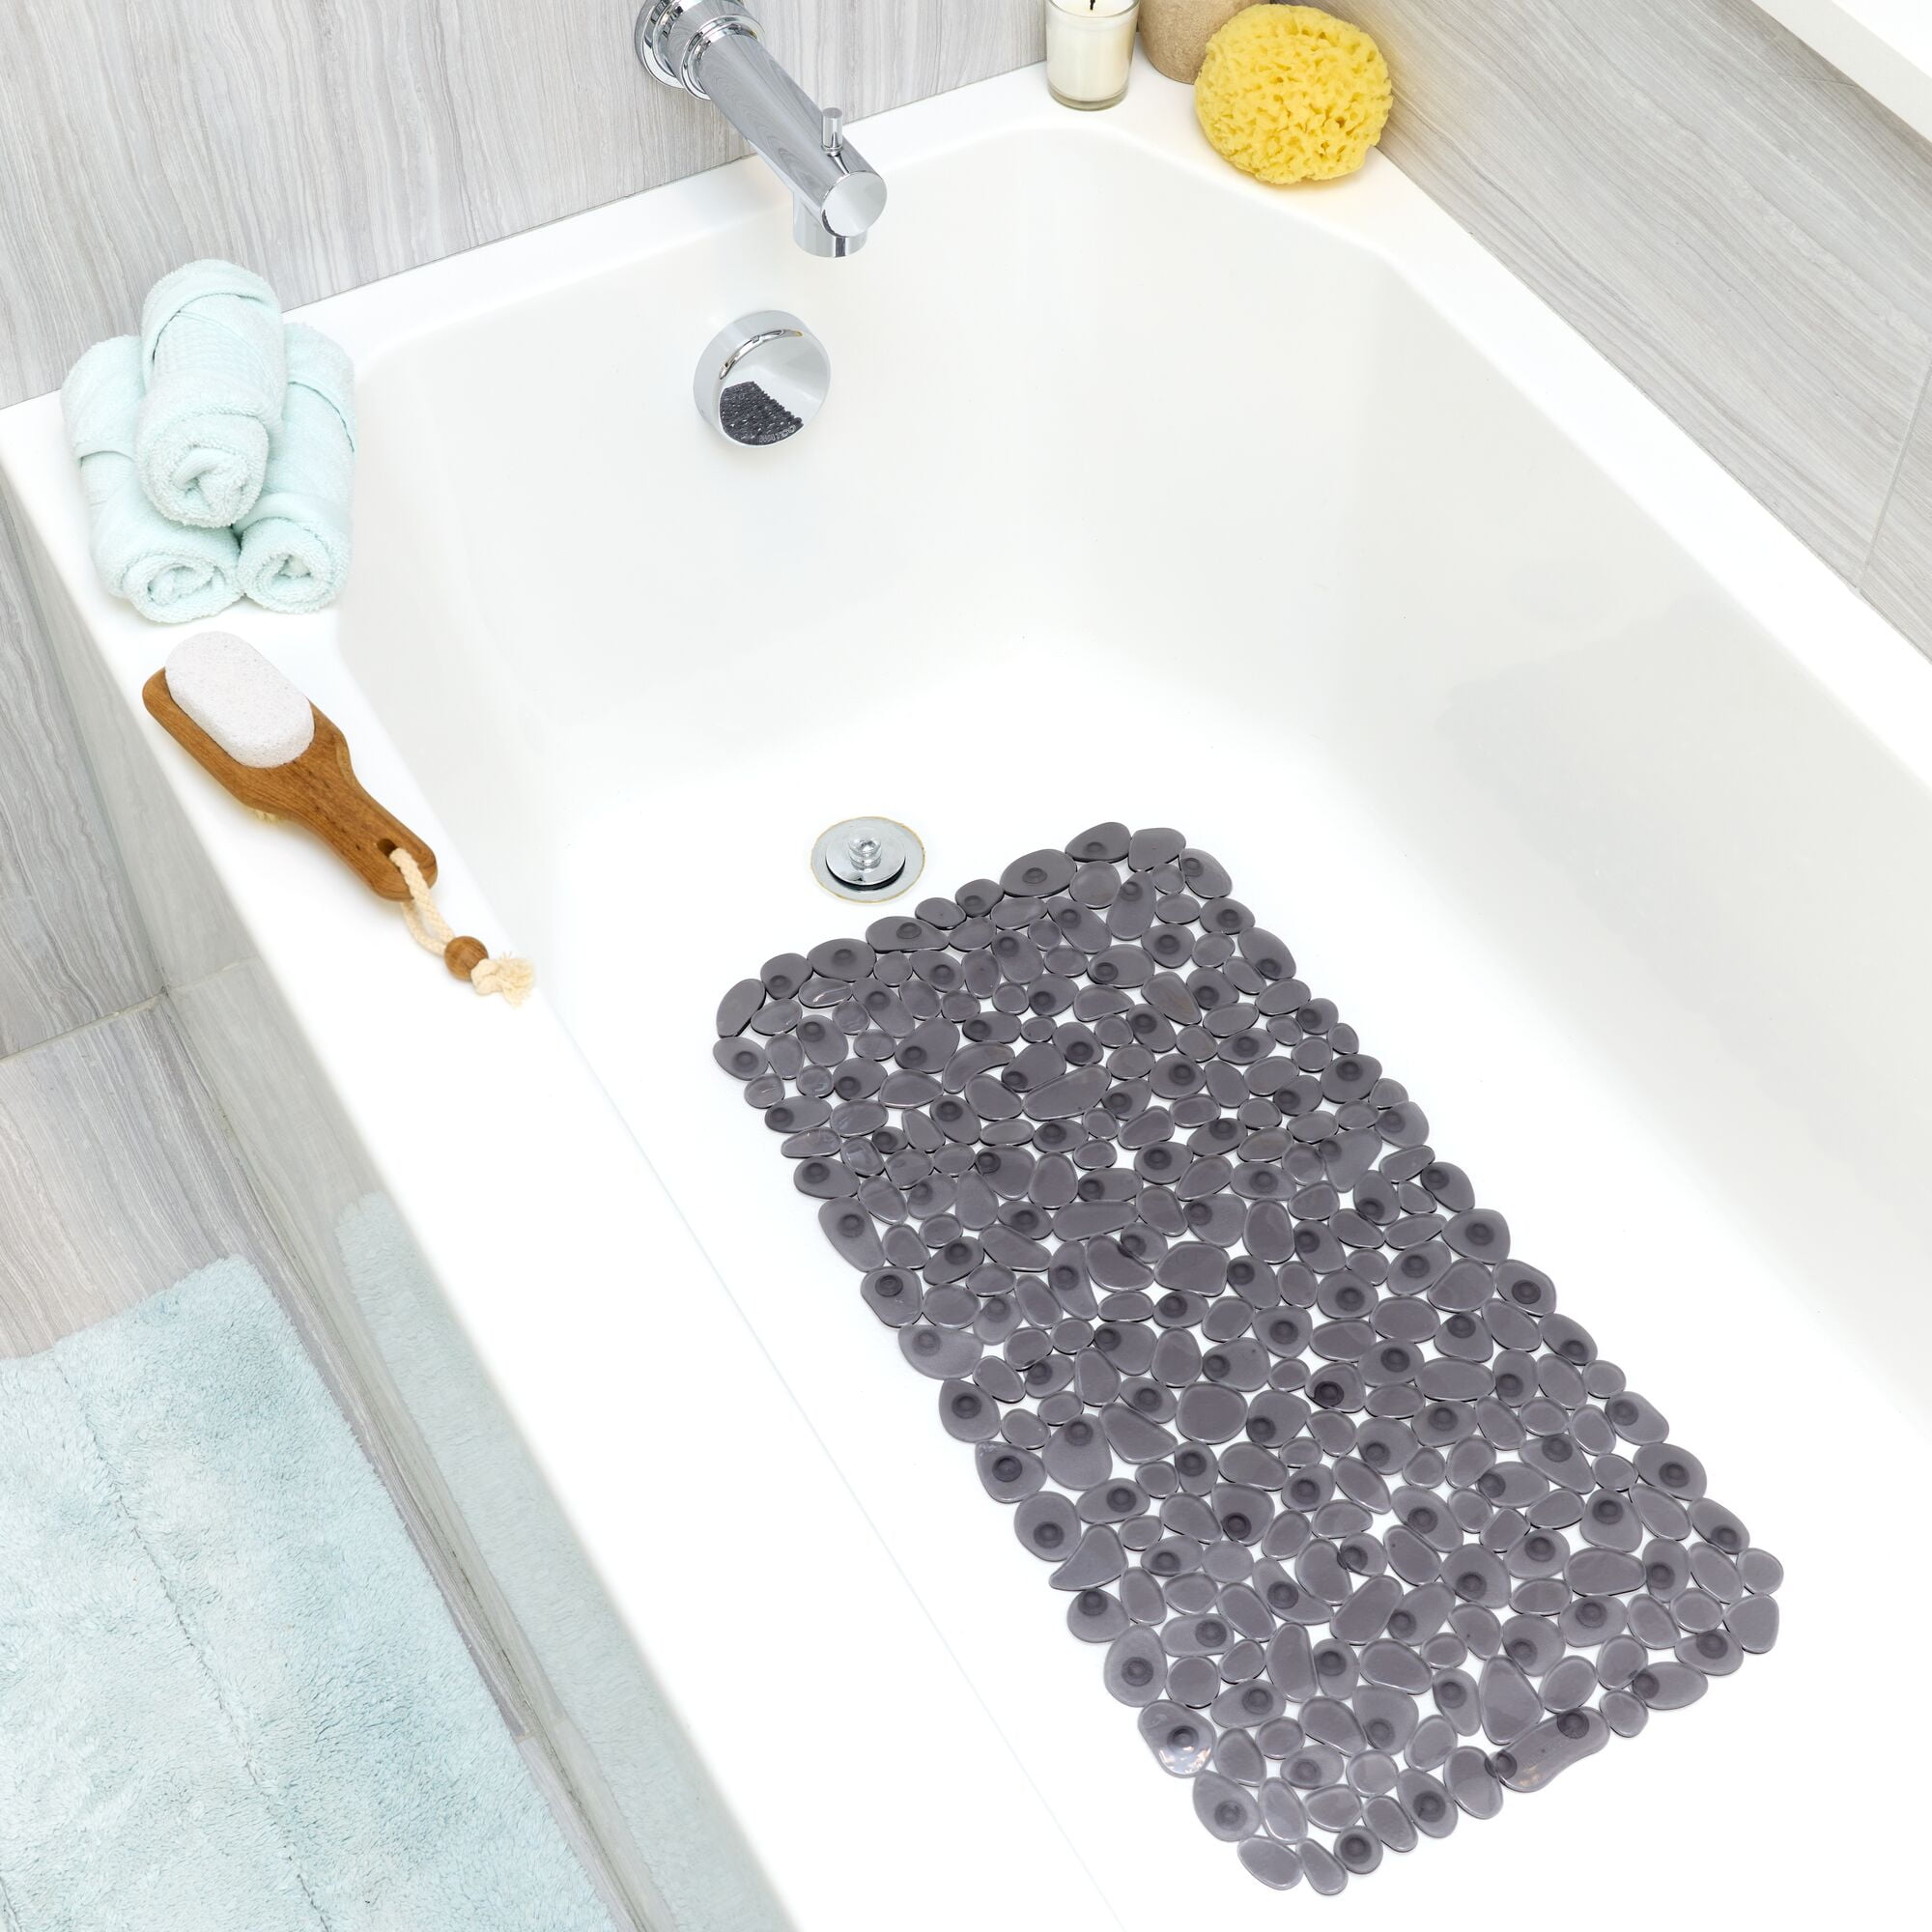 Clear PVC Bathroom Bath Tub Mat Anti-Slip Mat Drain Holes Slippery Resistant NEW 